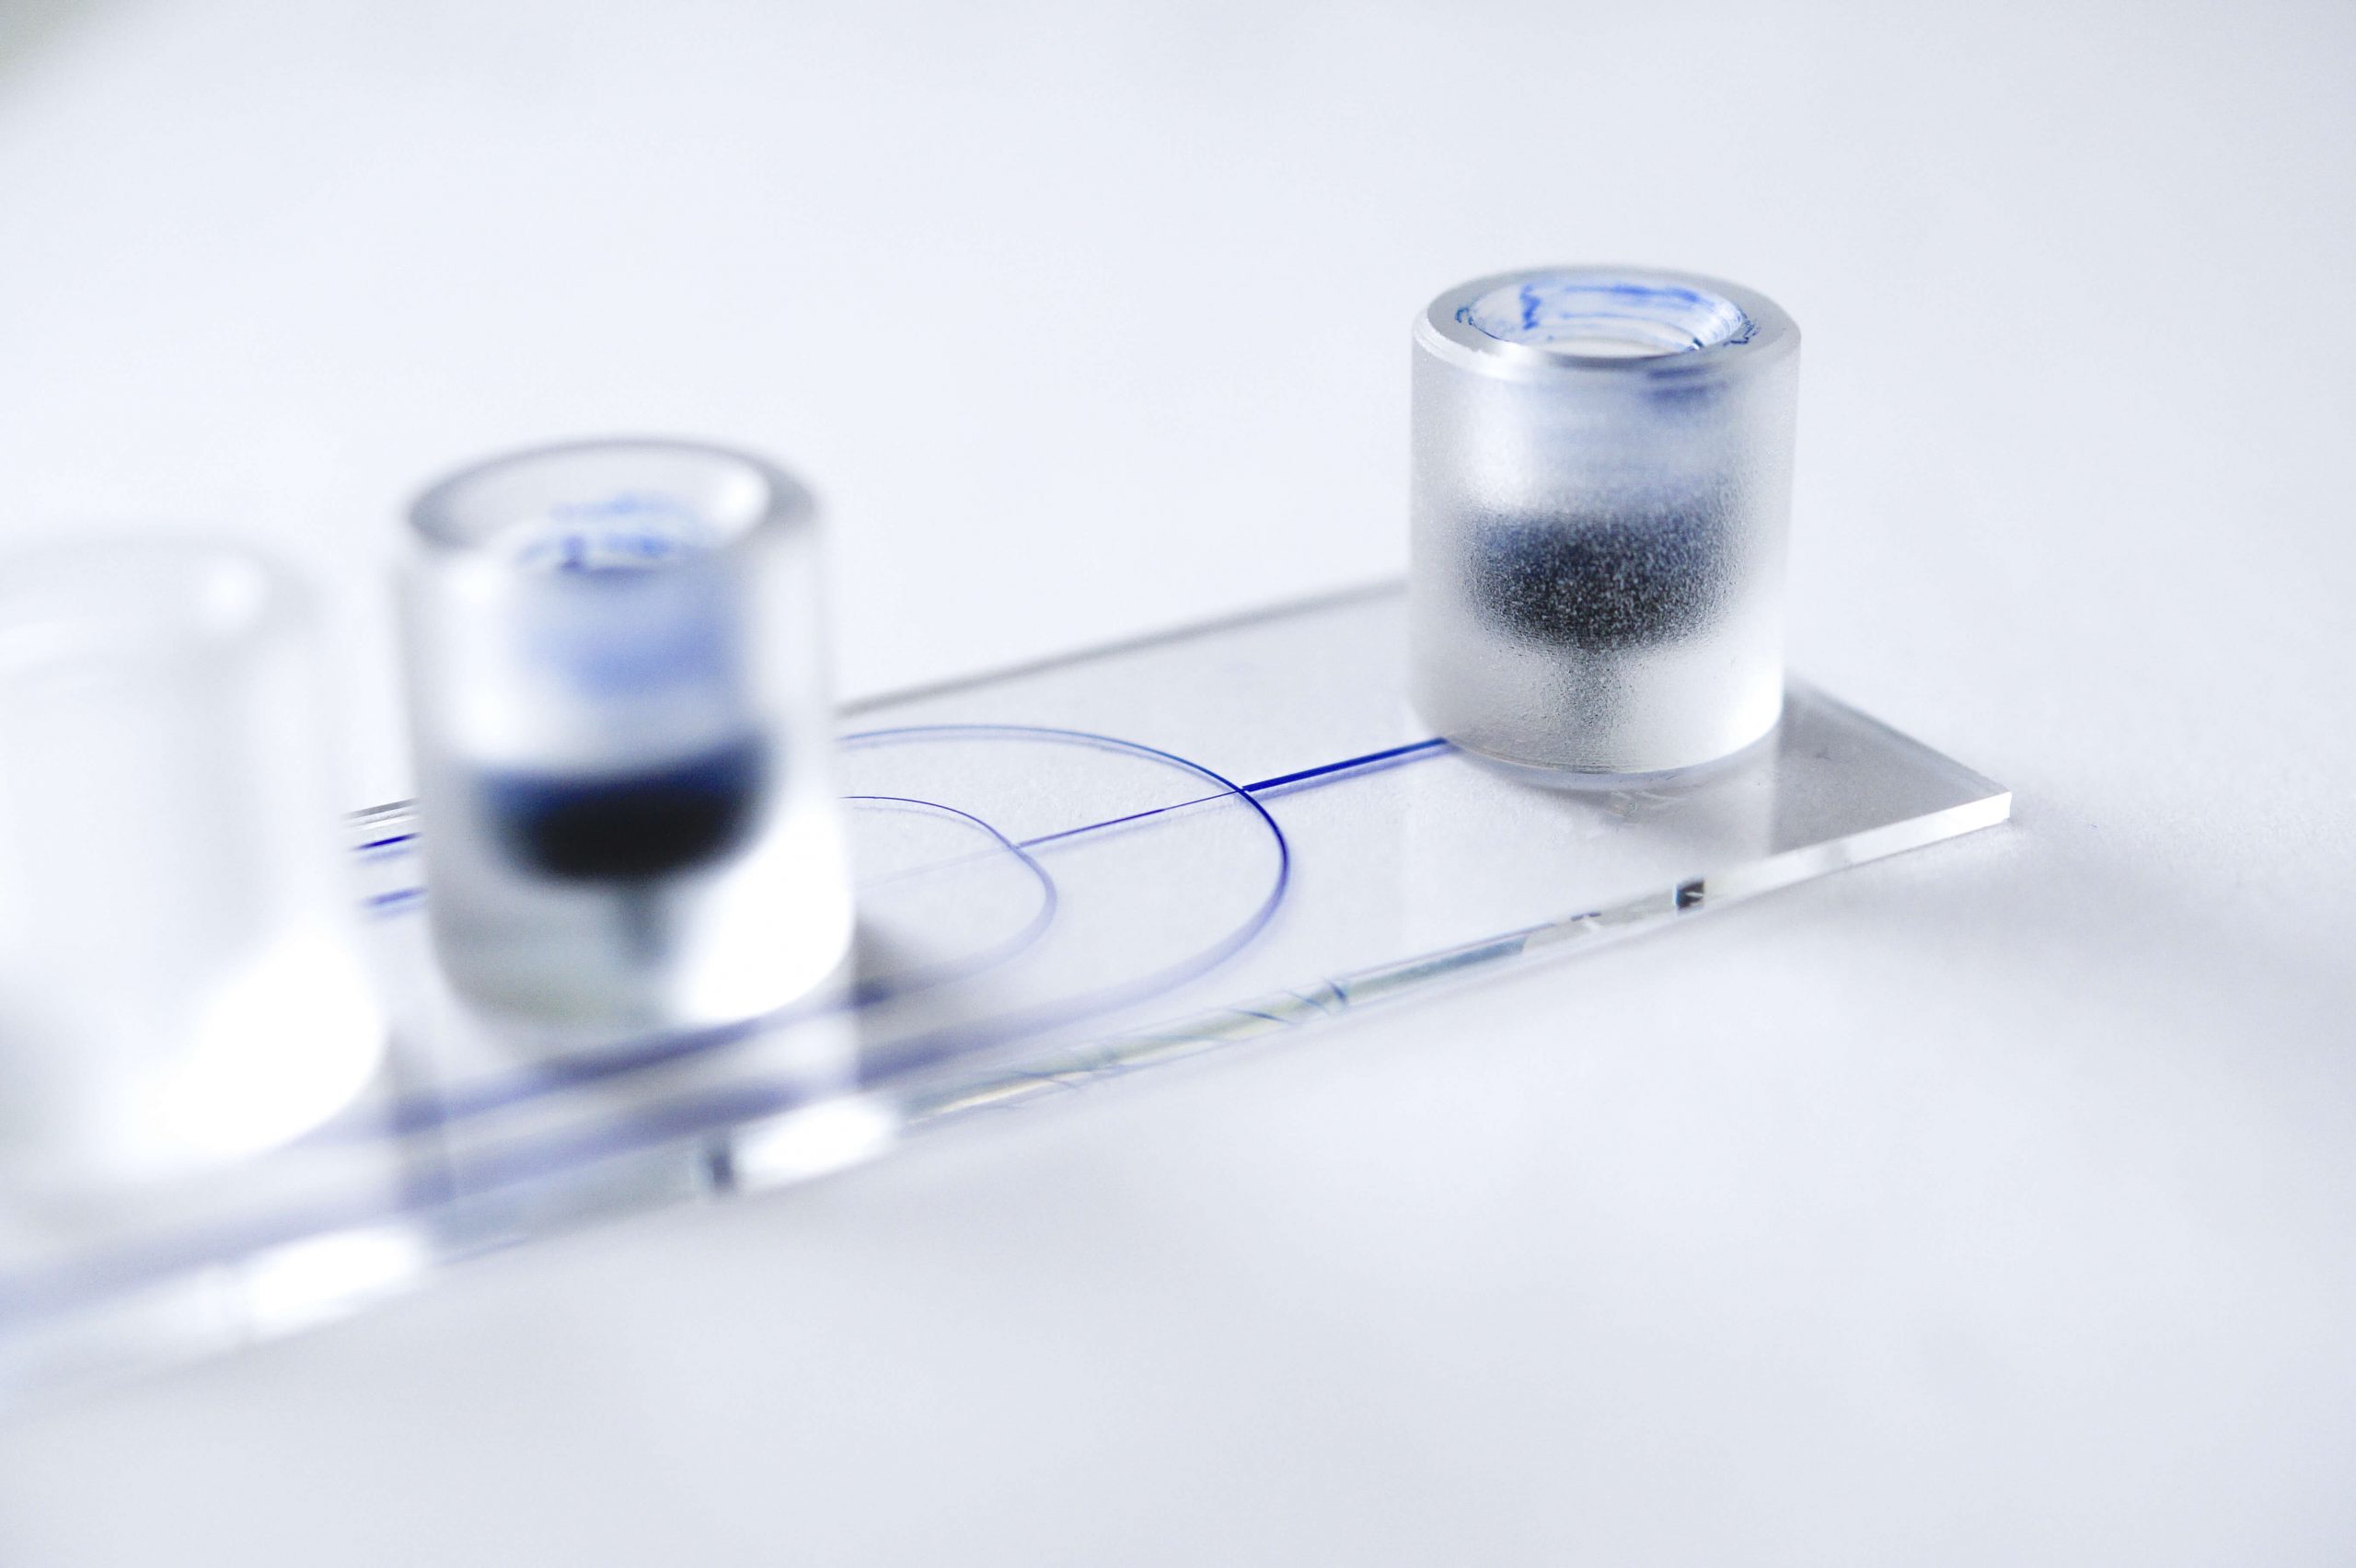 02 microfluidic chip for droplets elveflow microfluidics scaled